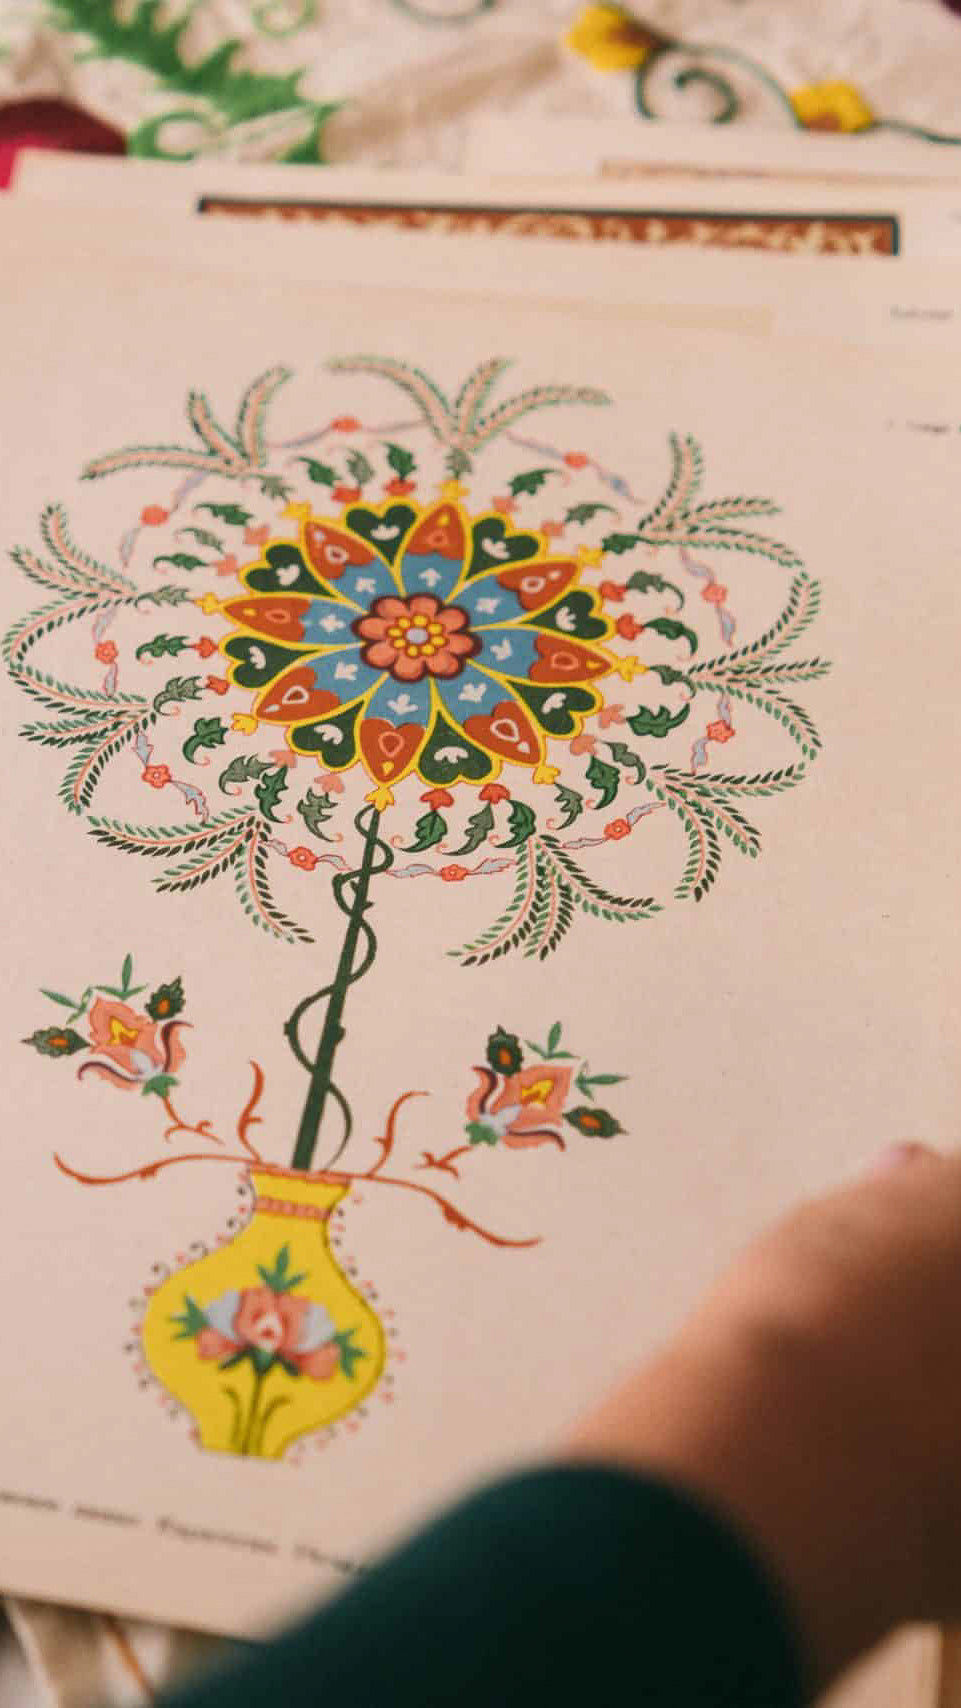 zazi-vintage-artisanal-partner-ozara-suzani-embroidery-sketch